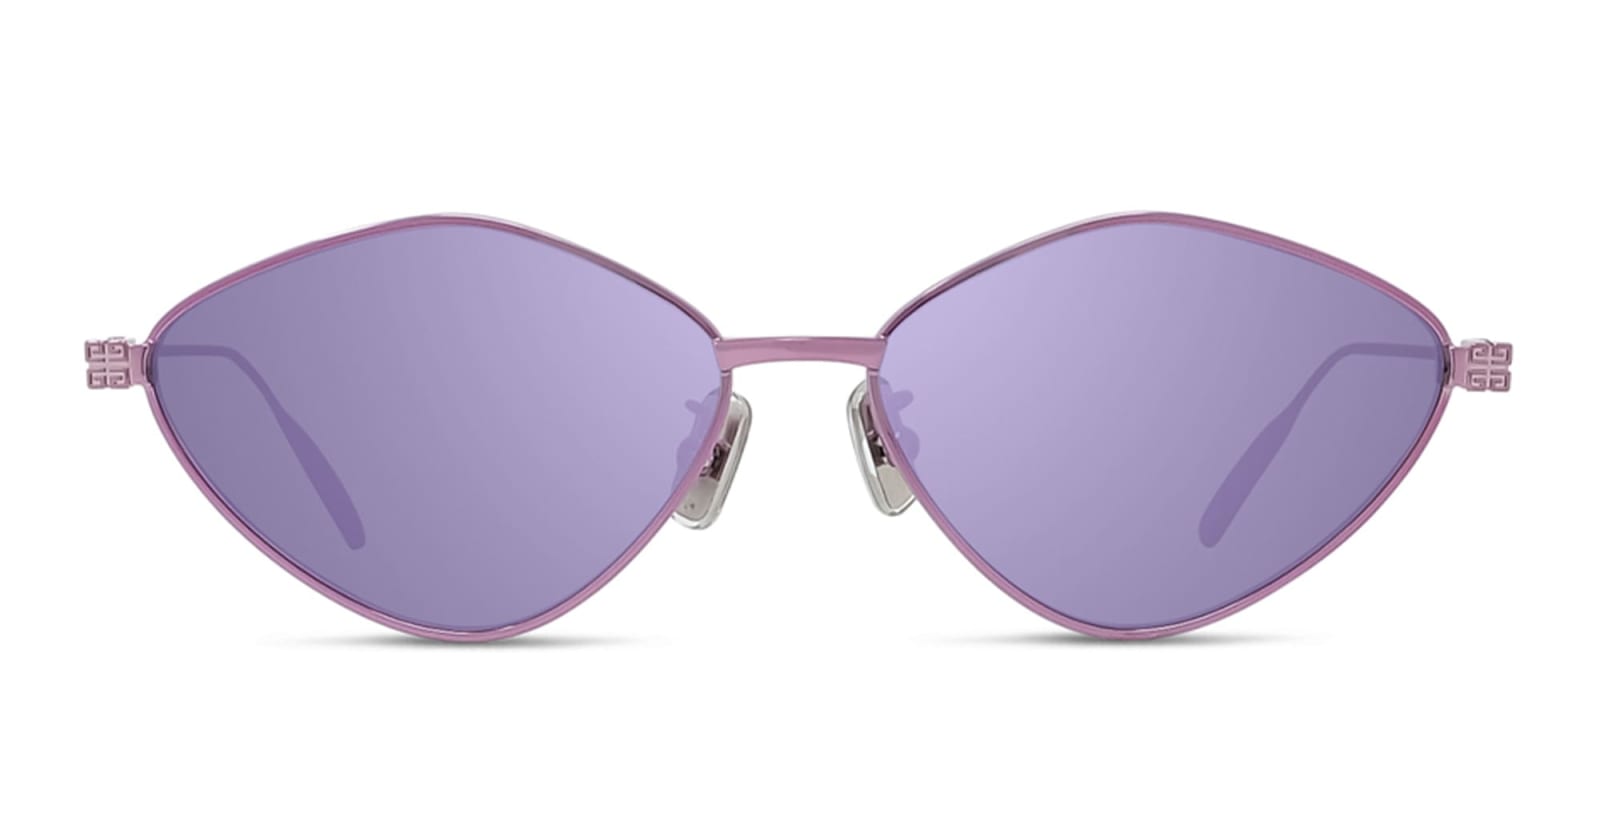 Gv40040u - Violet Sunglasses